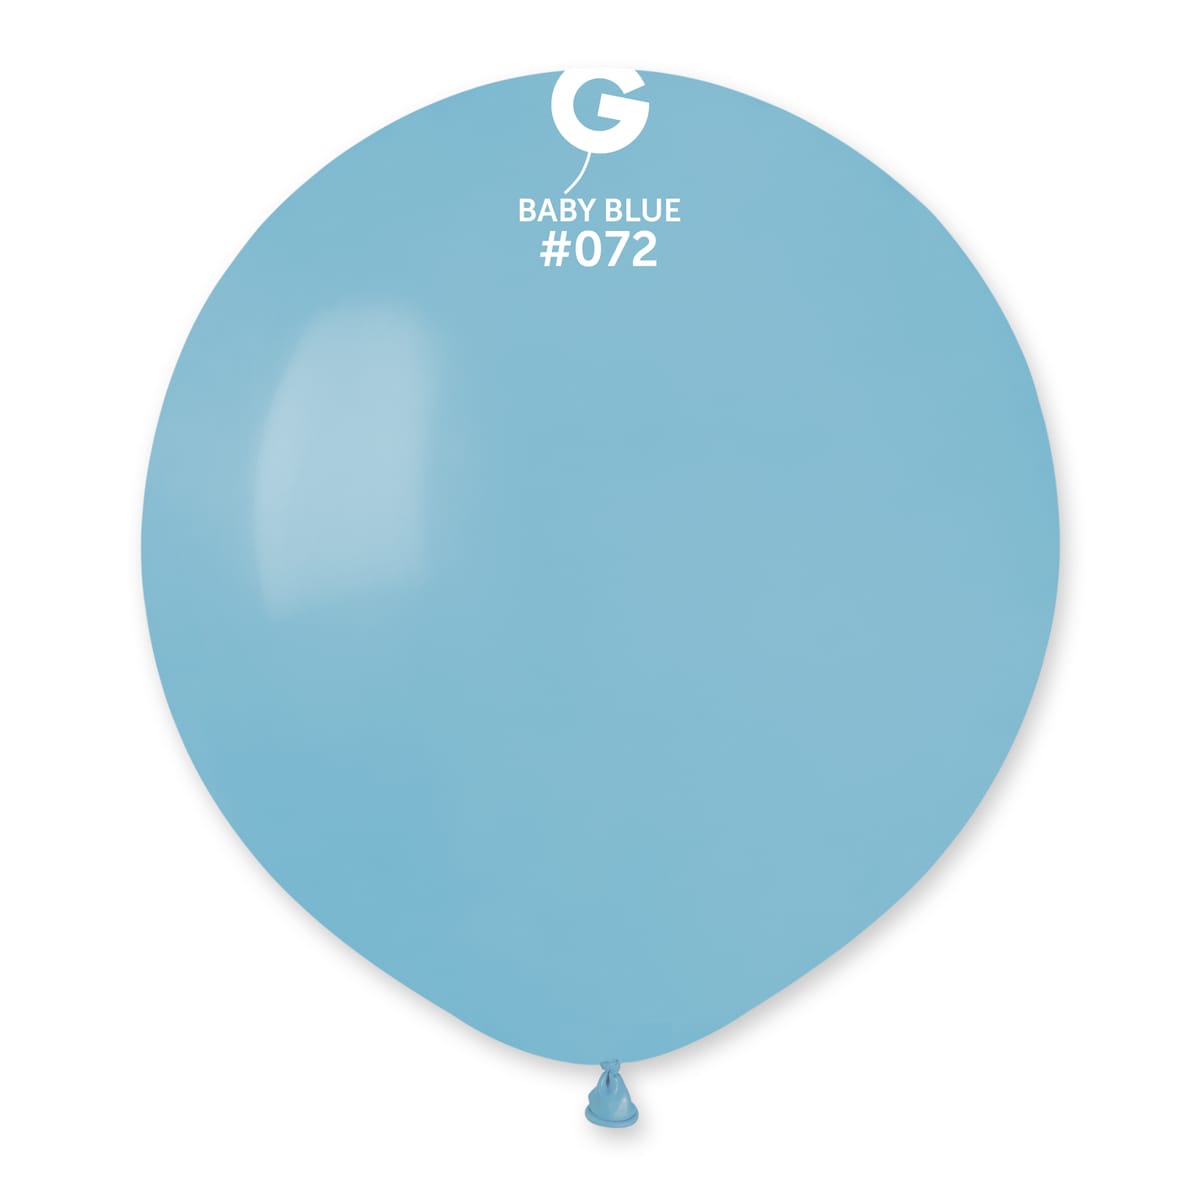 G-30” Baby blue #072 latex balloon